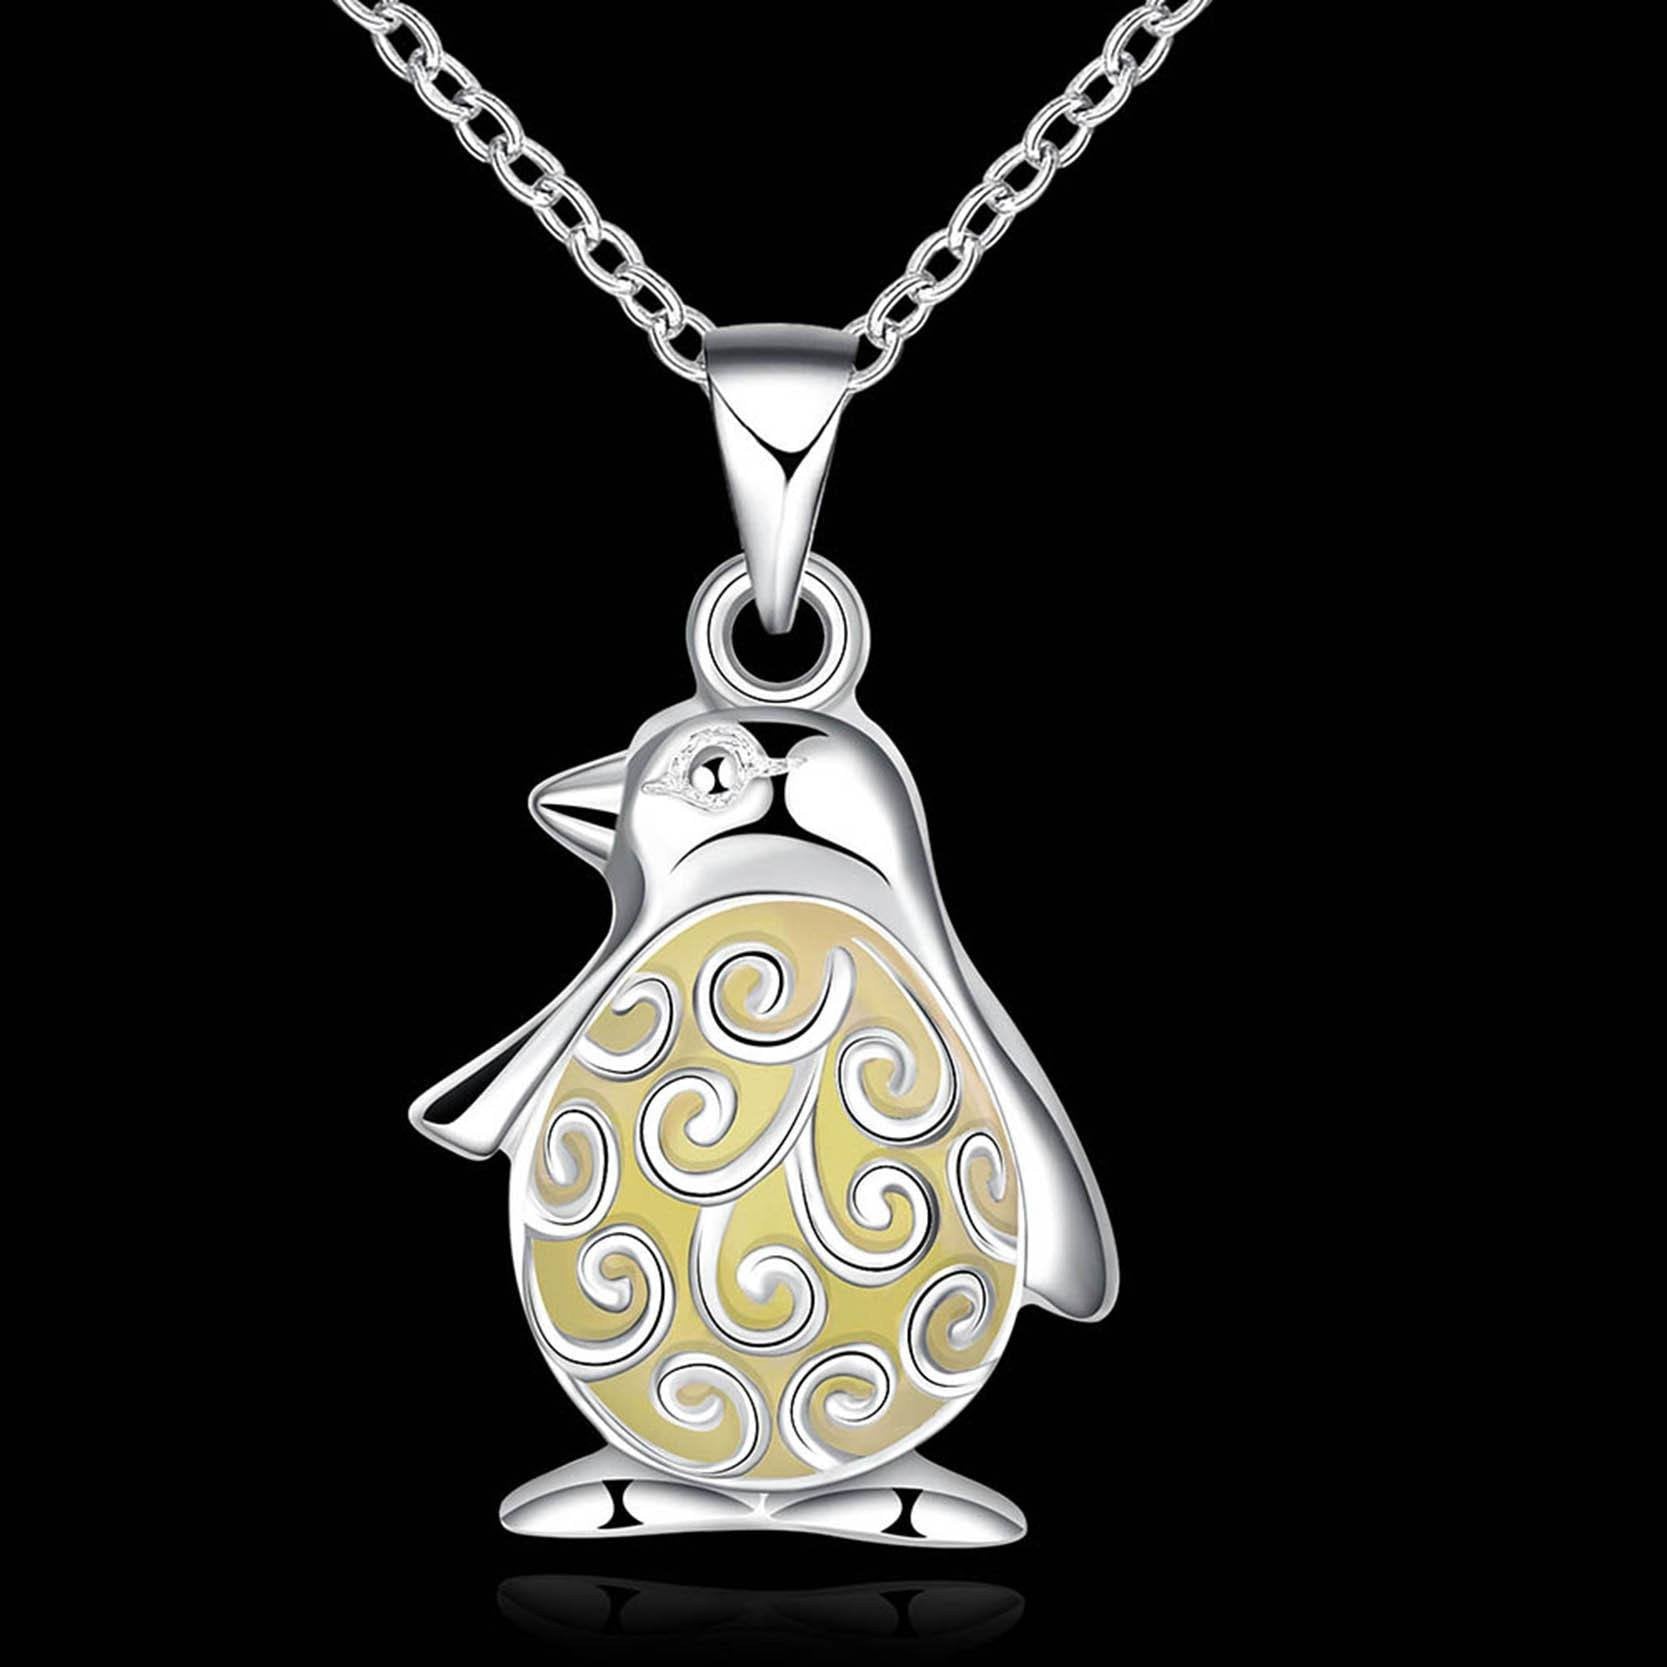 Pendant Necklaces - Glow In The Dark Penguin Necklace